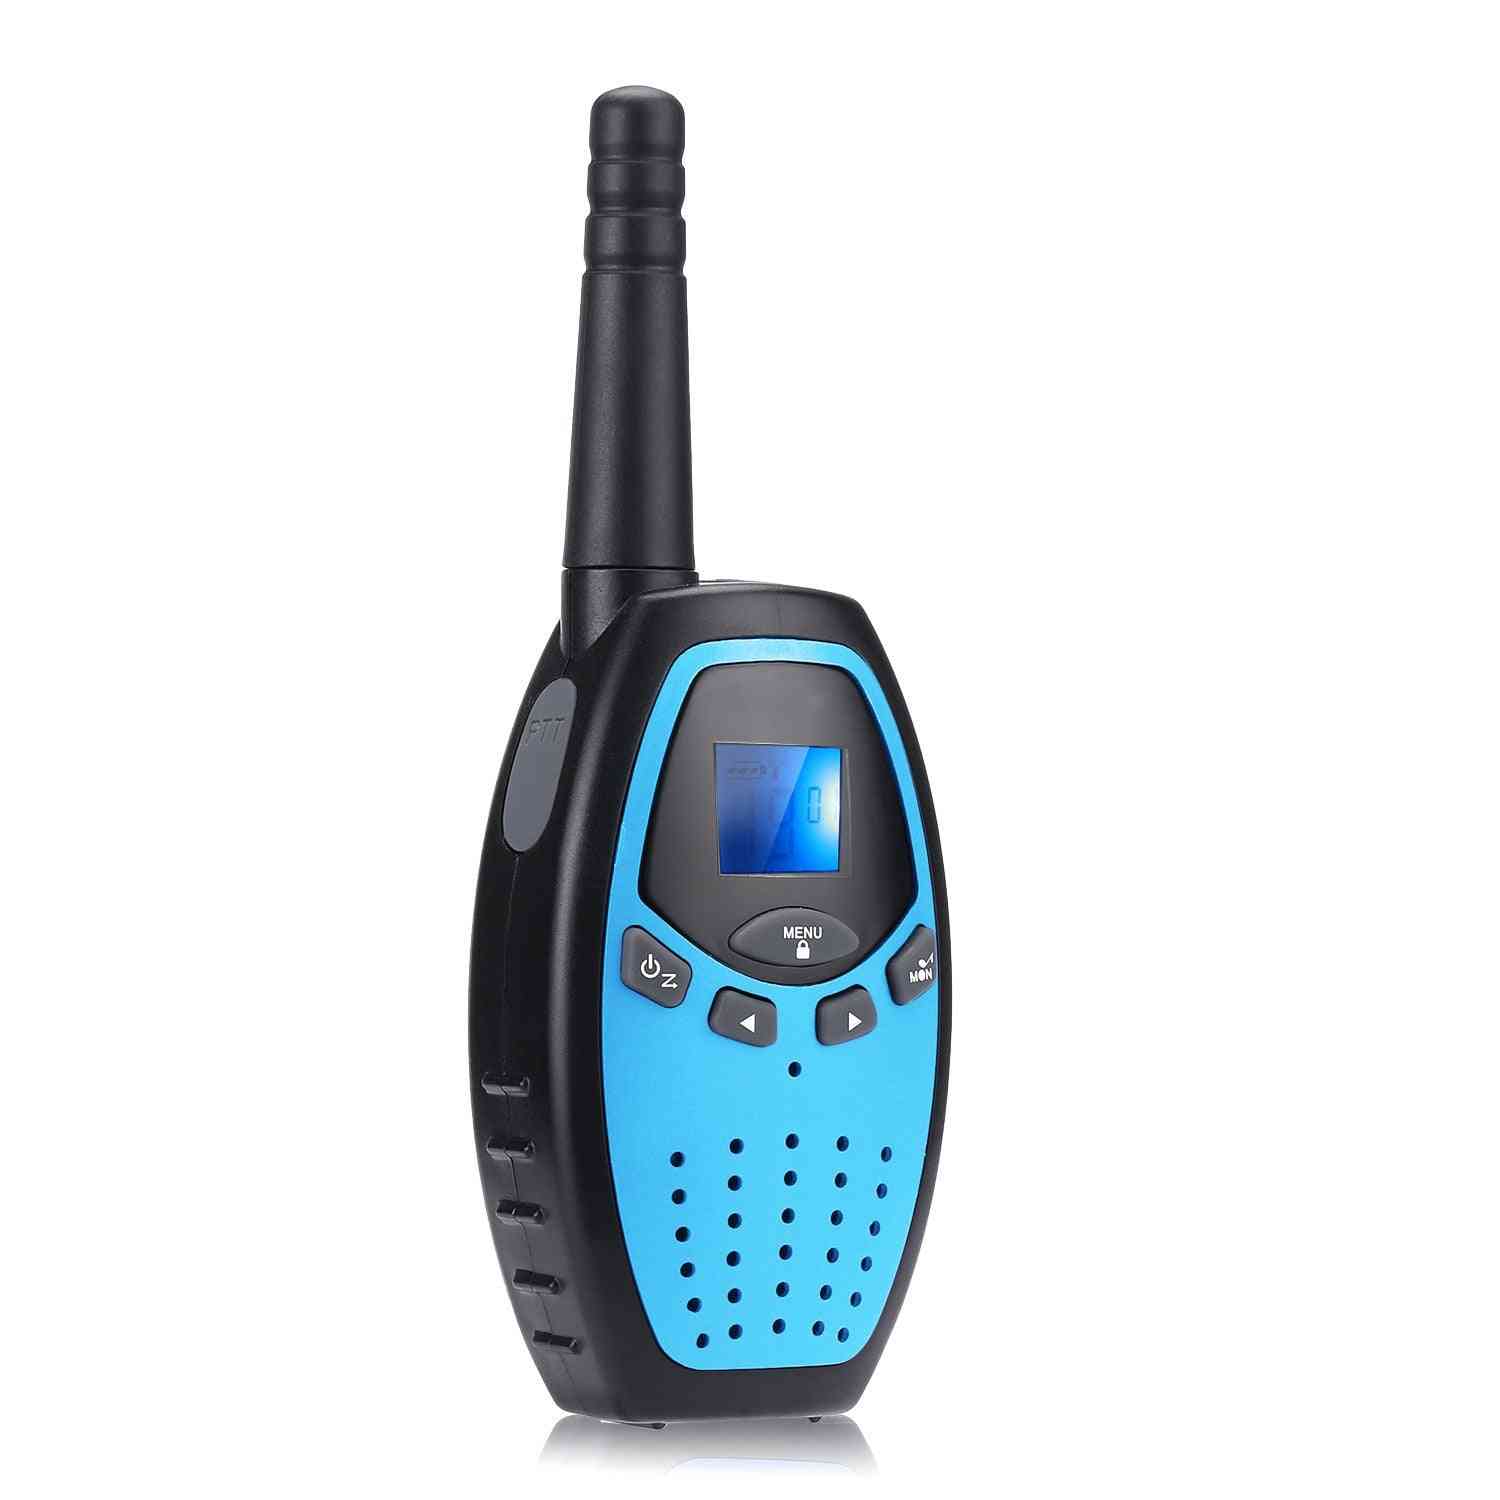 Barneleke walkie talkie, bærbart radioutstyr